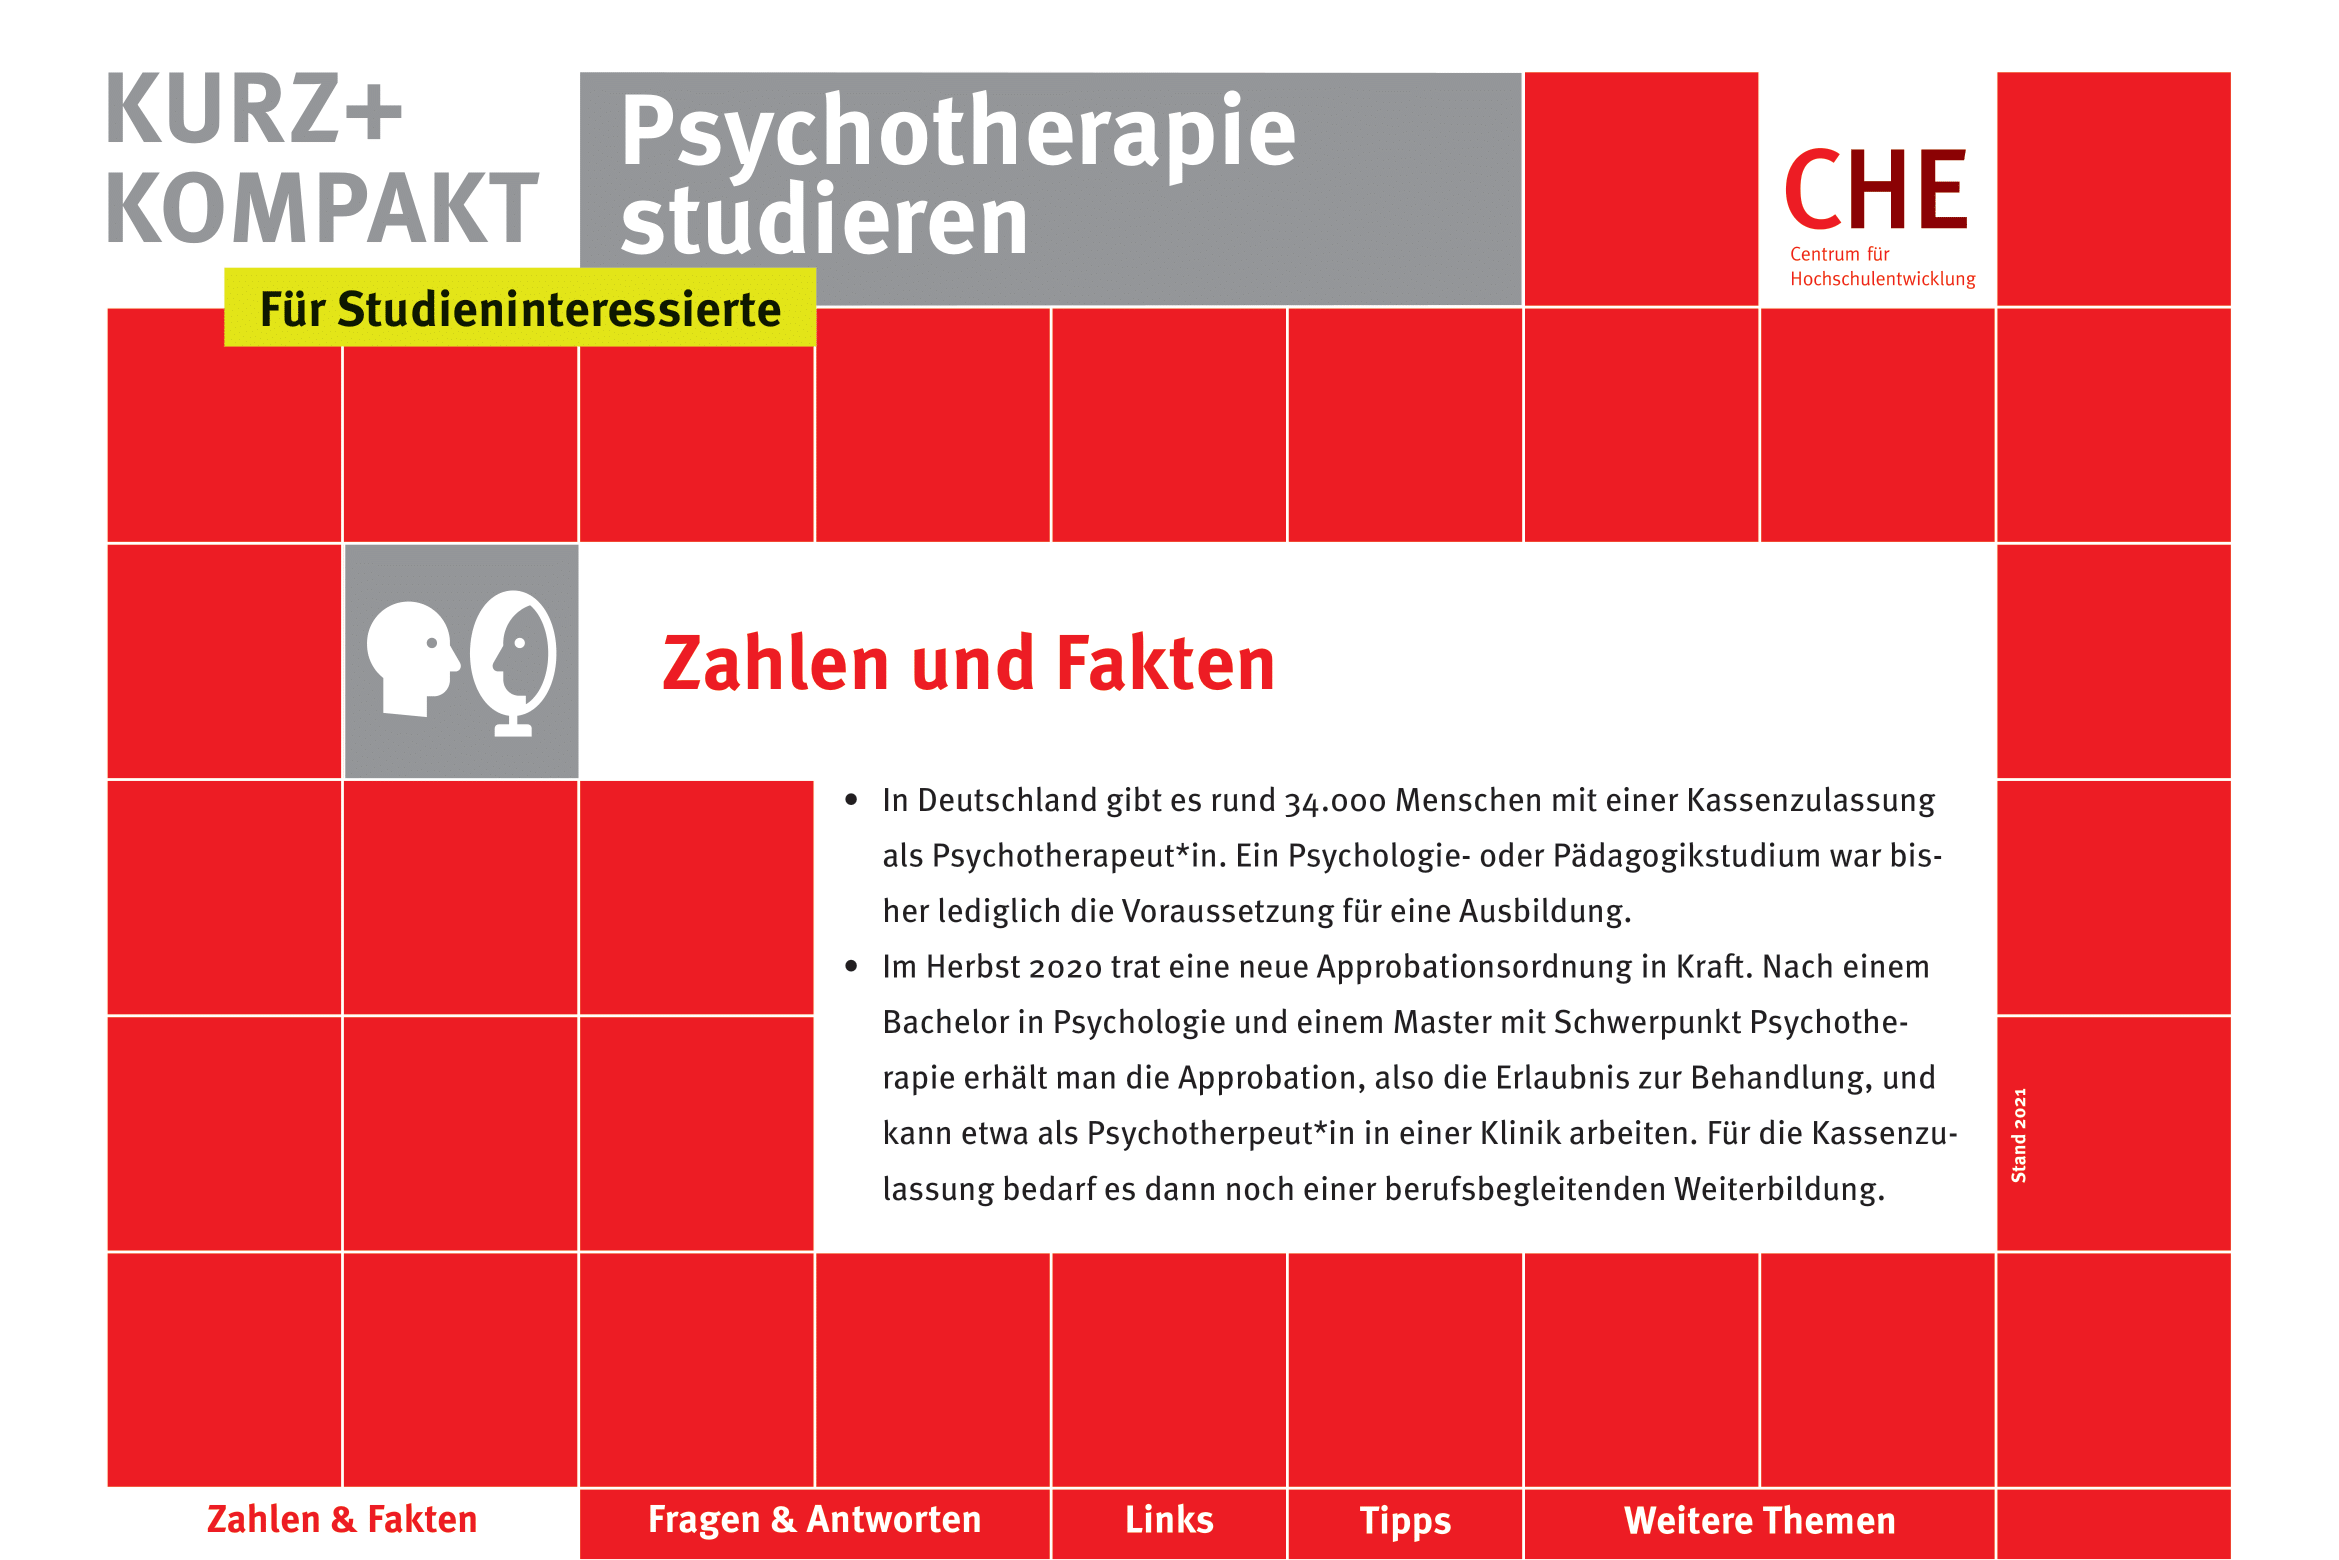 CHE kurz + kompakt – Psychotherapie studieren PDF-Cover